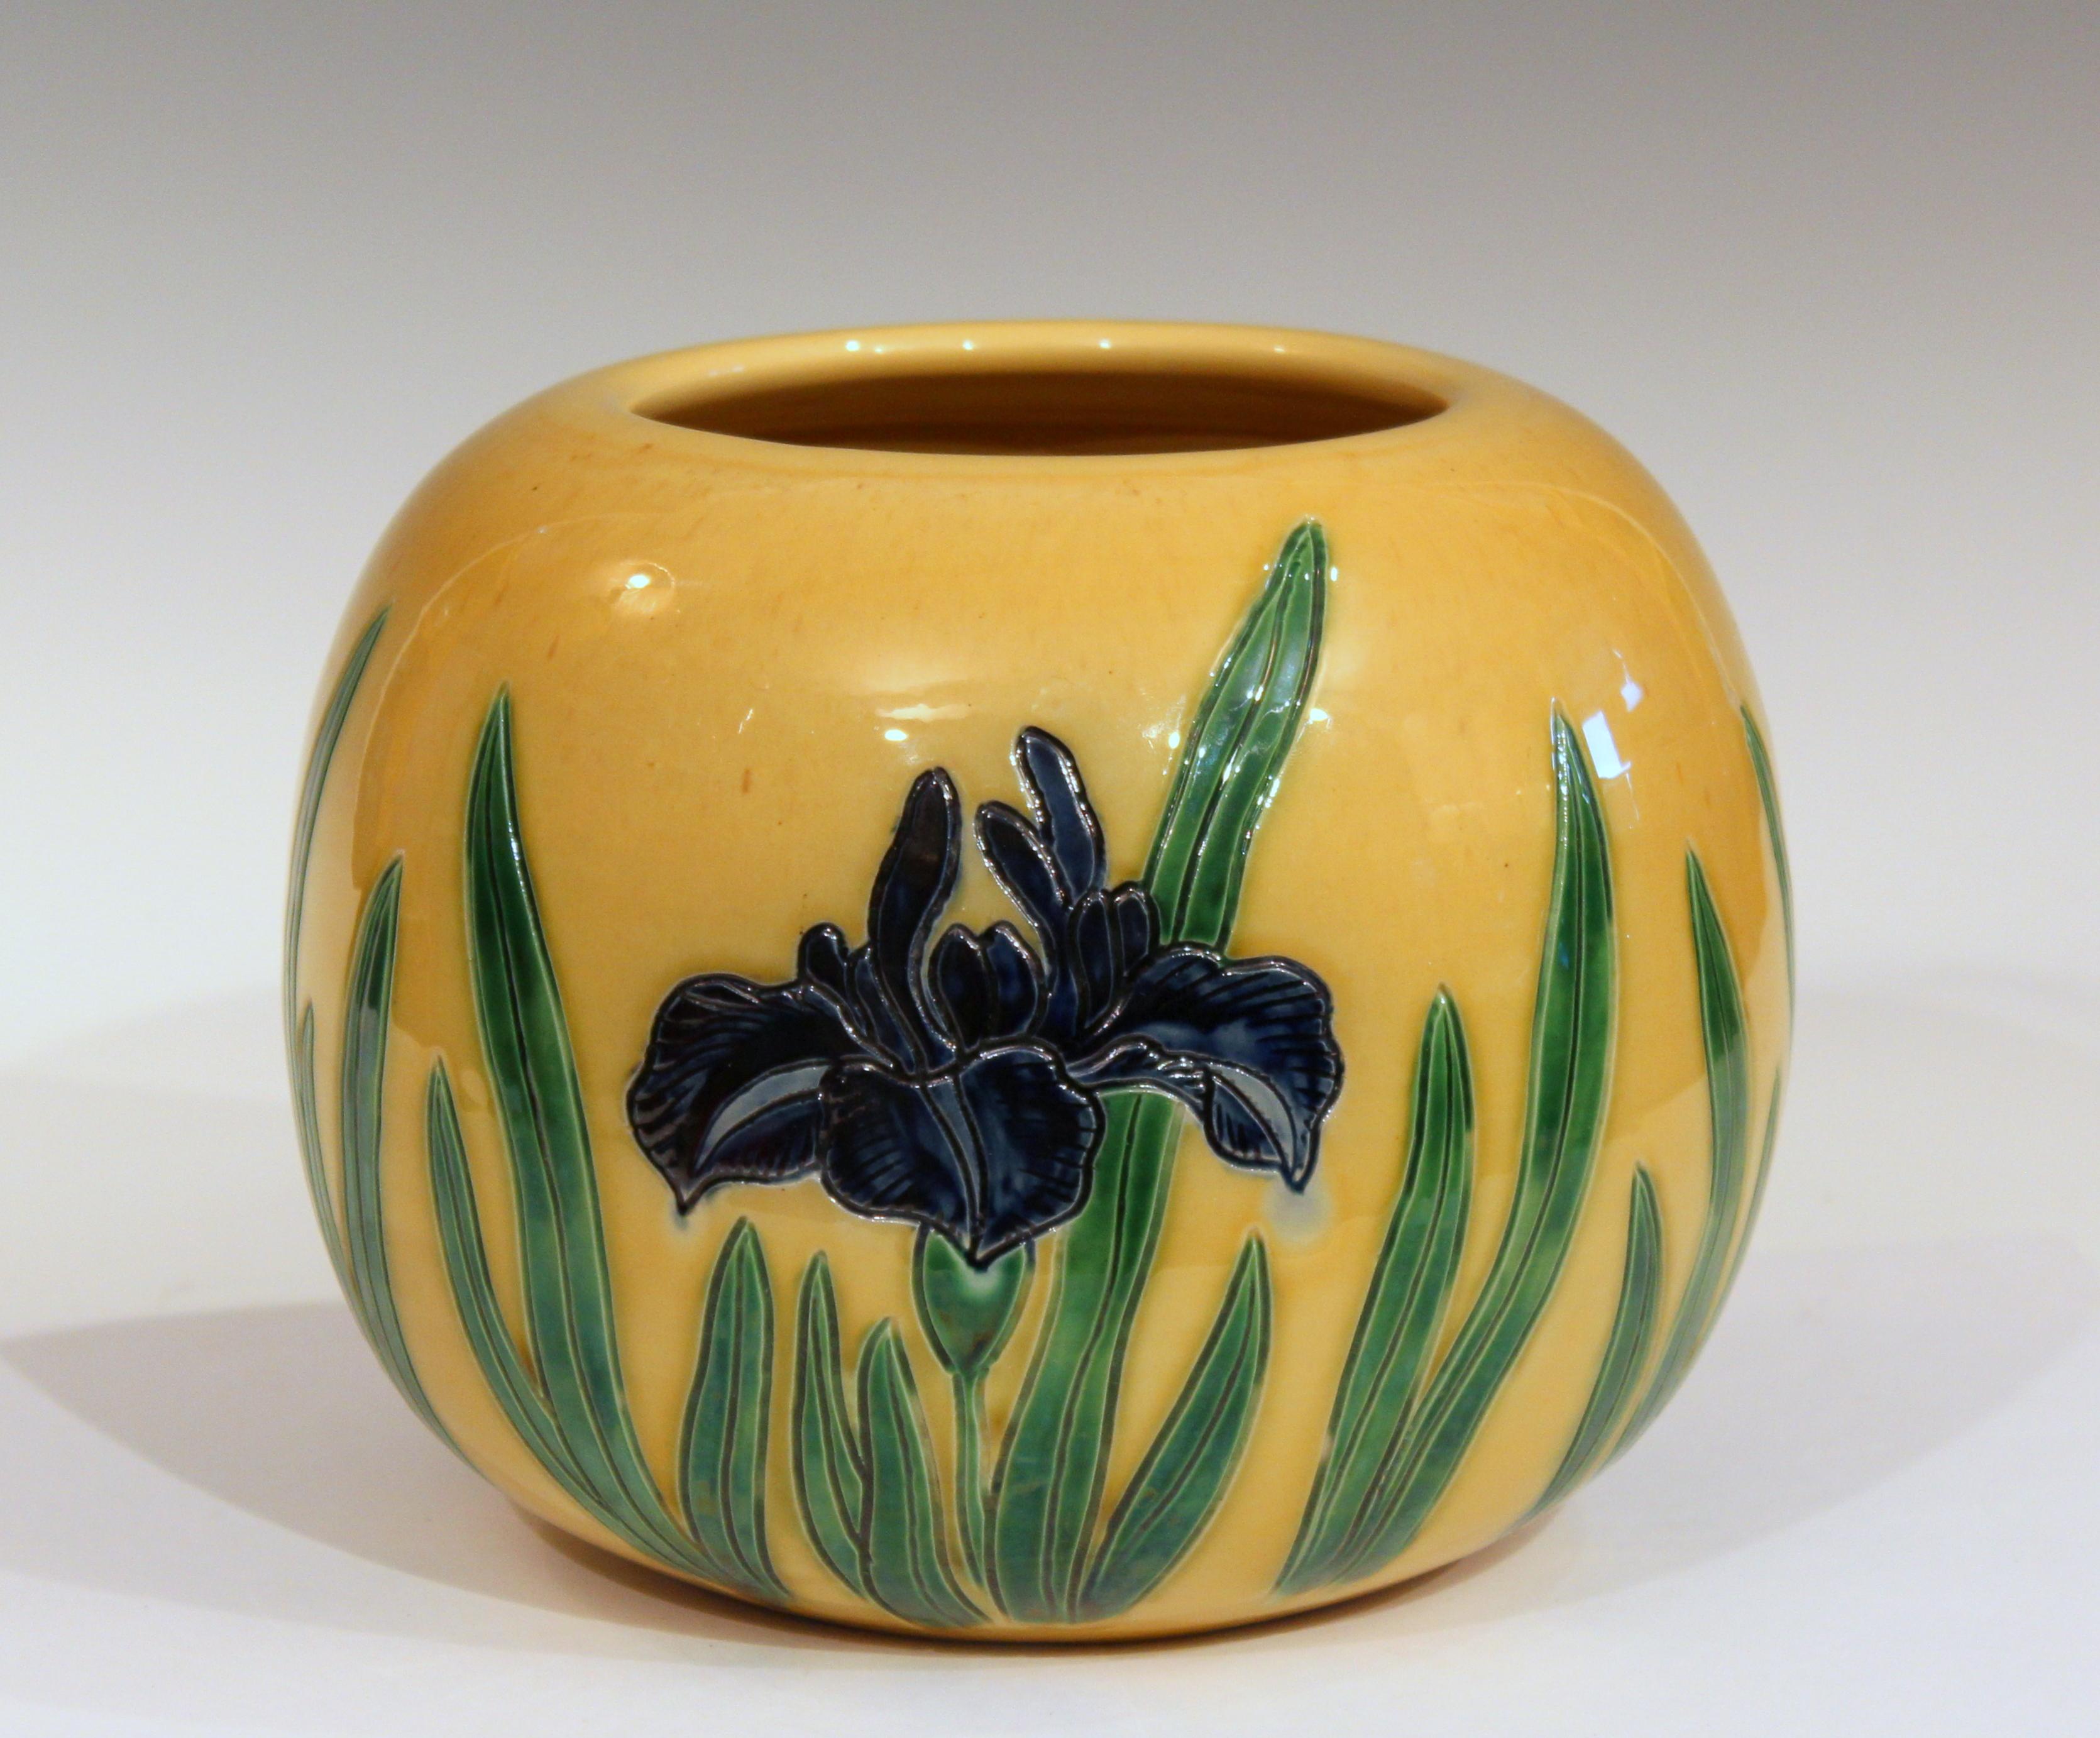 Tanabe-Awaji Japanese Studio Pottery vase with three incised iris vignettes, circa 1920s. Measures: 9